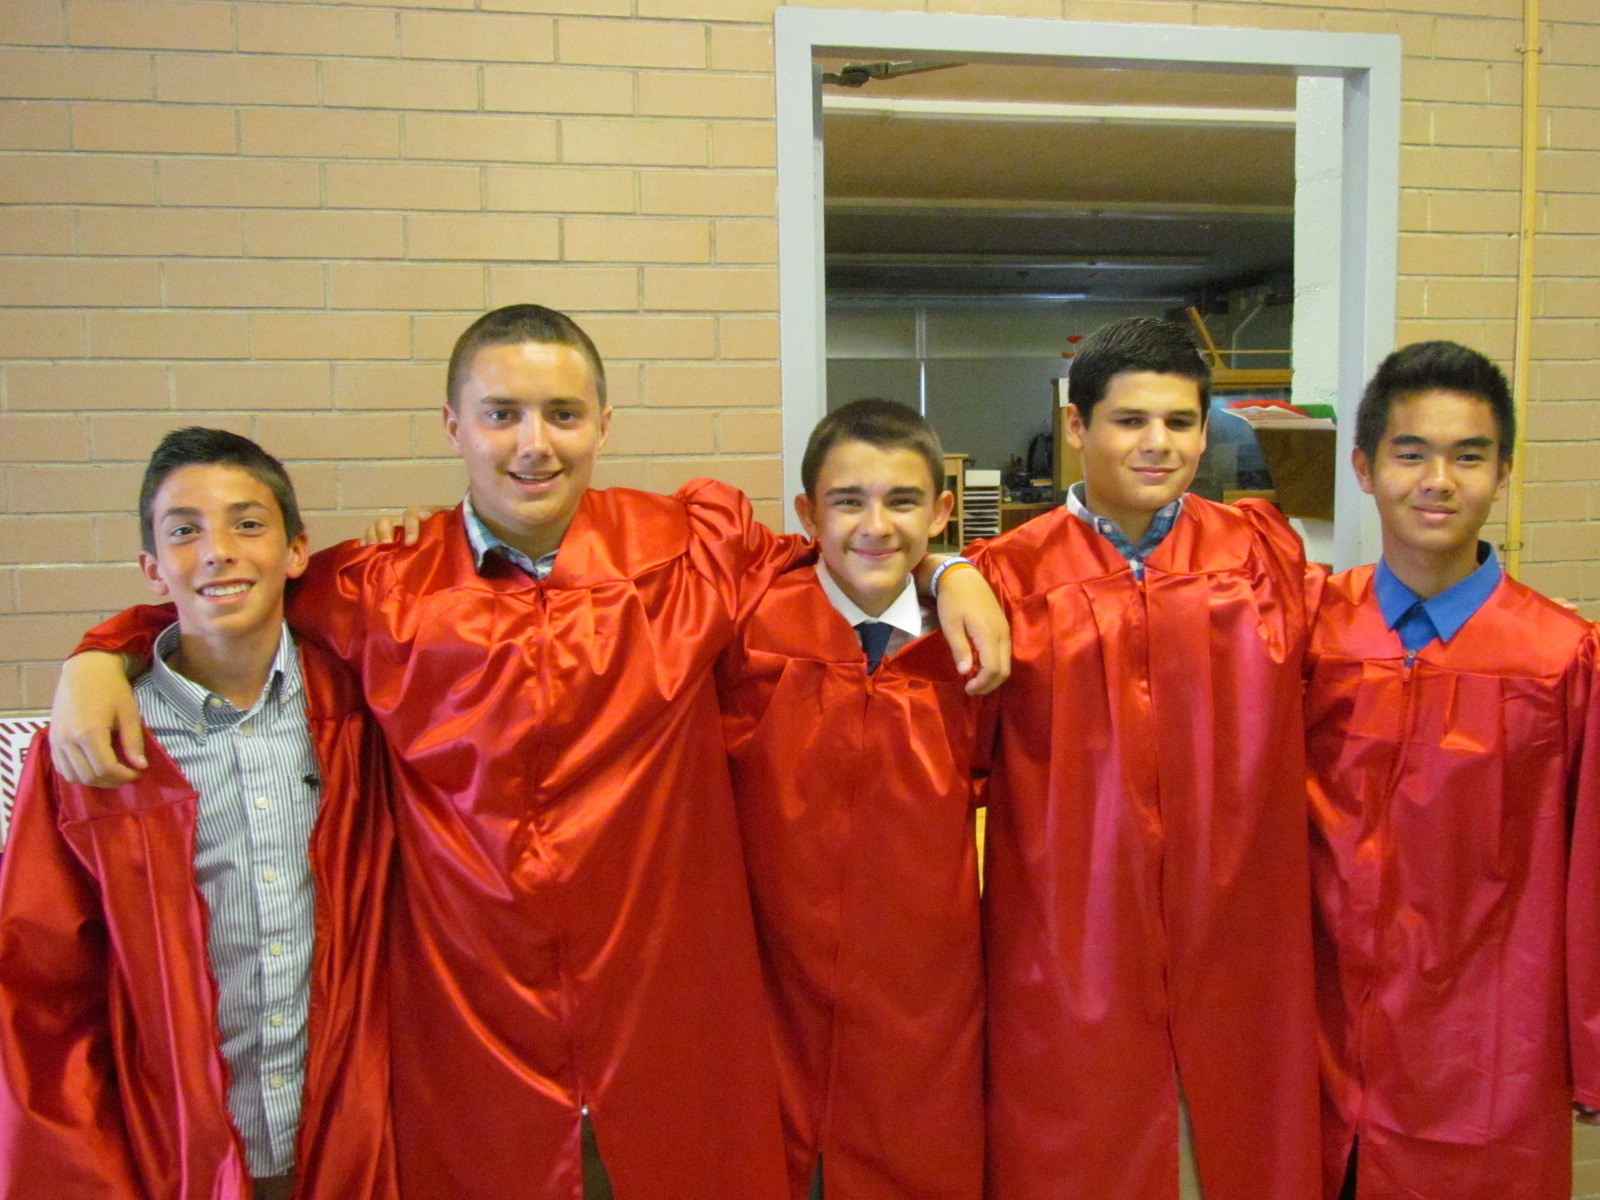 Matteo Ritaccio, left, Sean Russell, Daniel Rau, Jake Rosenthal and Jason Oo celebrated their graduation from W.T. Clarke Middle School.